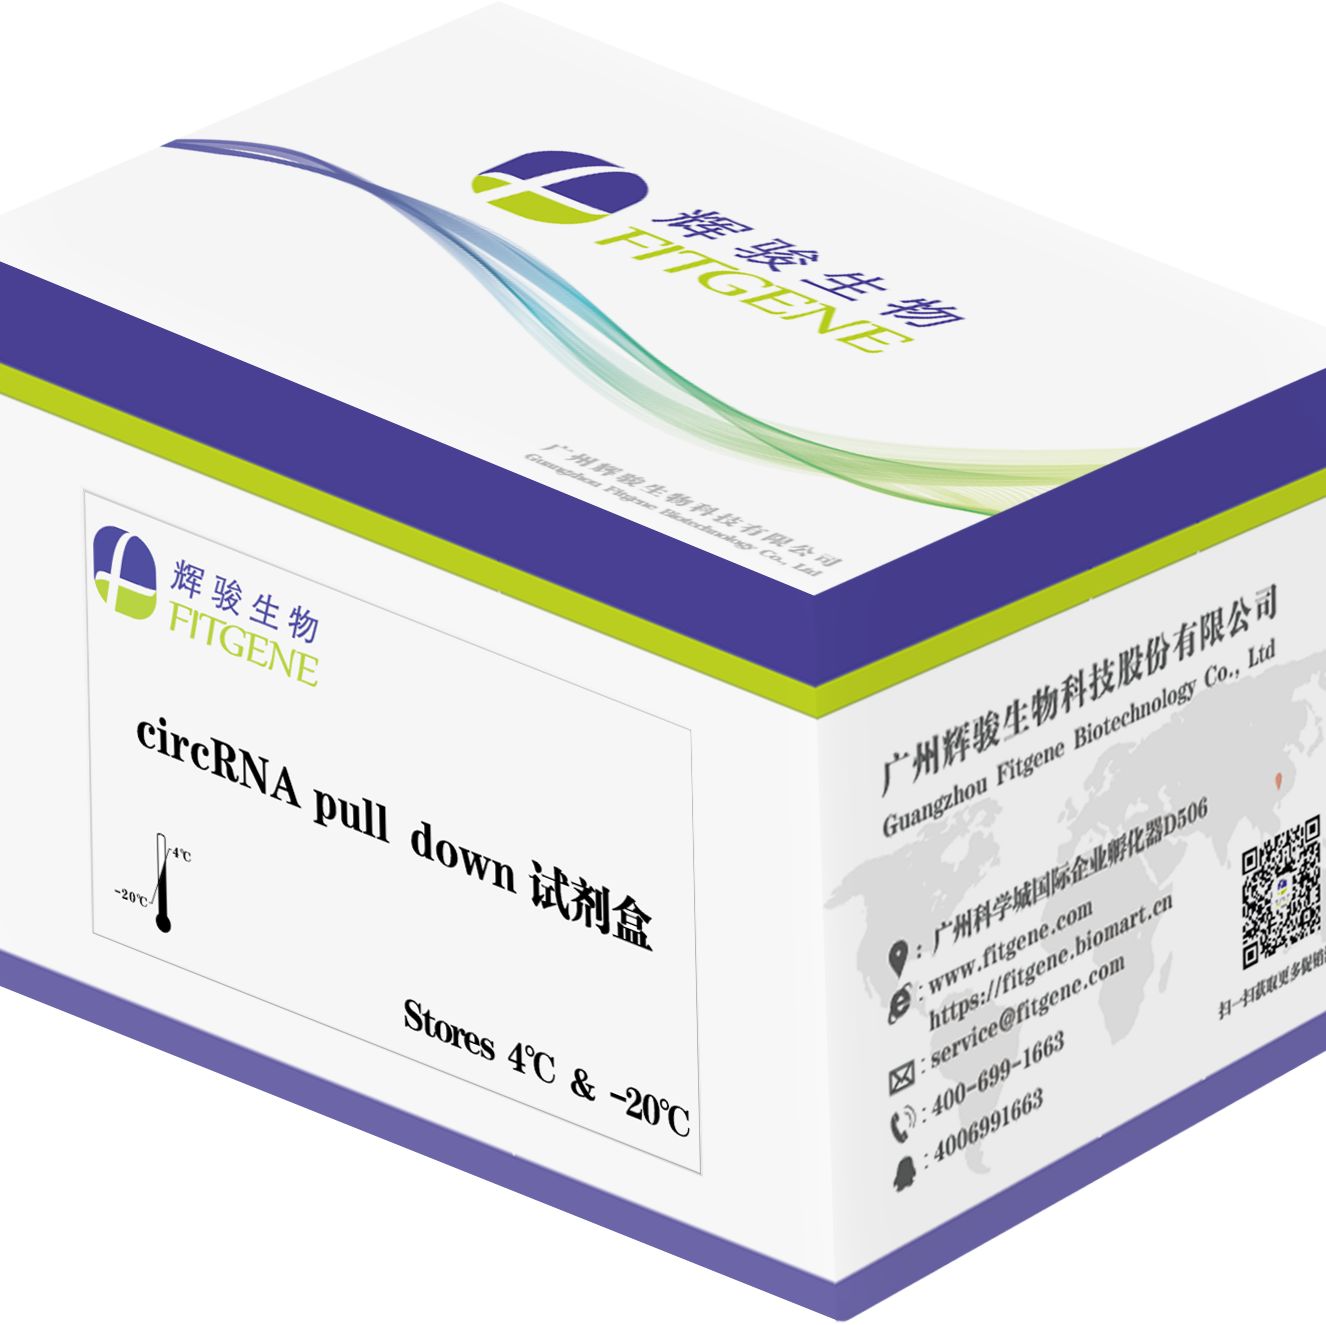 circRNA pull down试剂盒-调取效率高/操作简便/价格低-辉骏生物试剂盒厂家